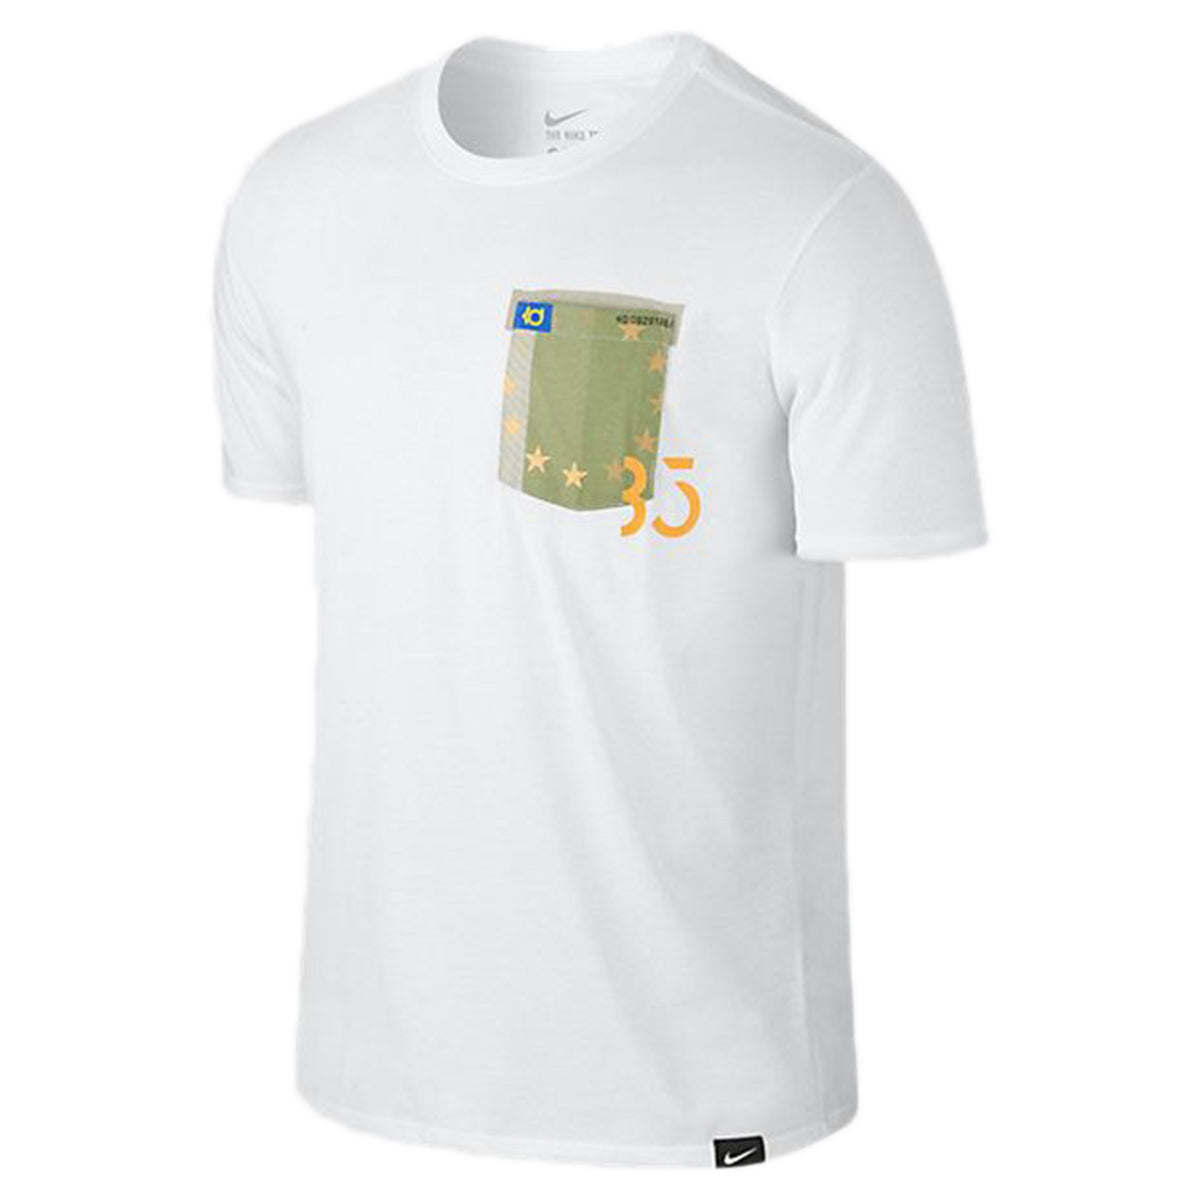 Nike Kd 8 Ho2 Pocket Dri-fit T-shirt  Mens Style : 779205